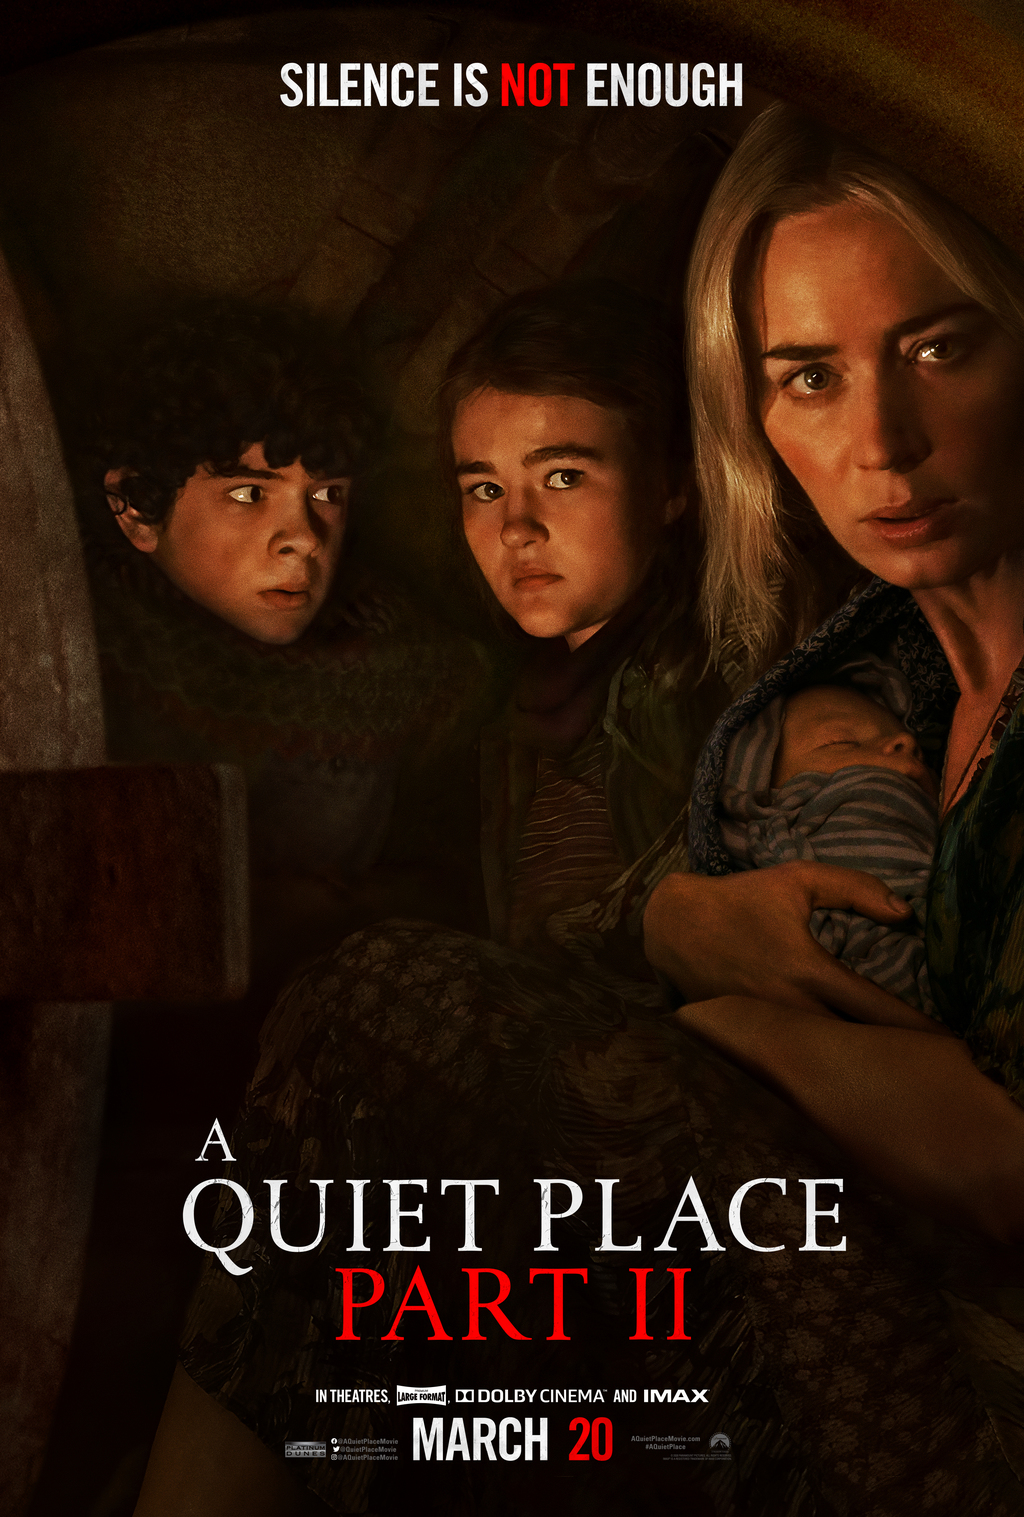 A Quiet Place Part II no se salva de los retrasos